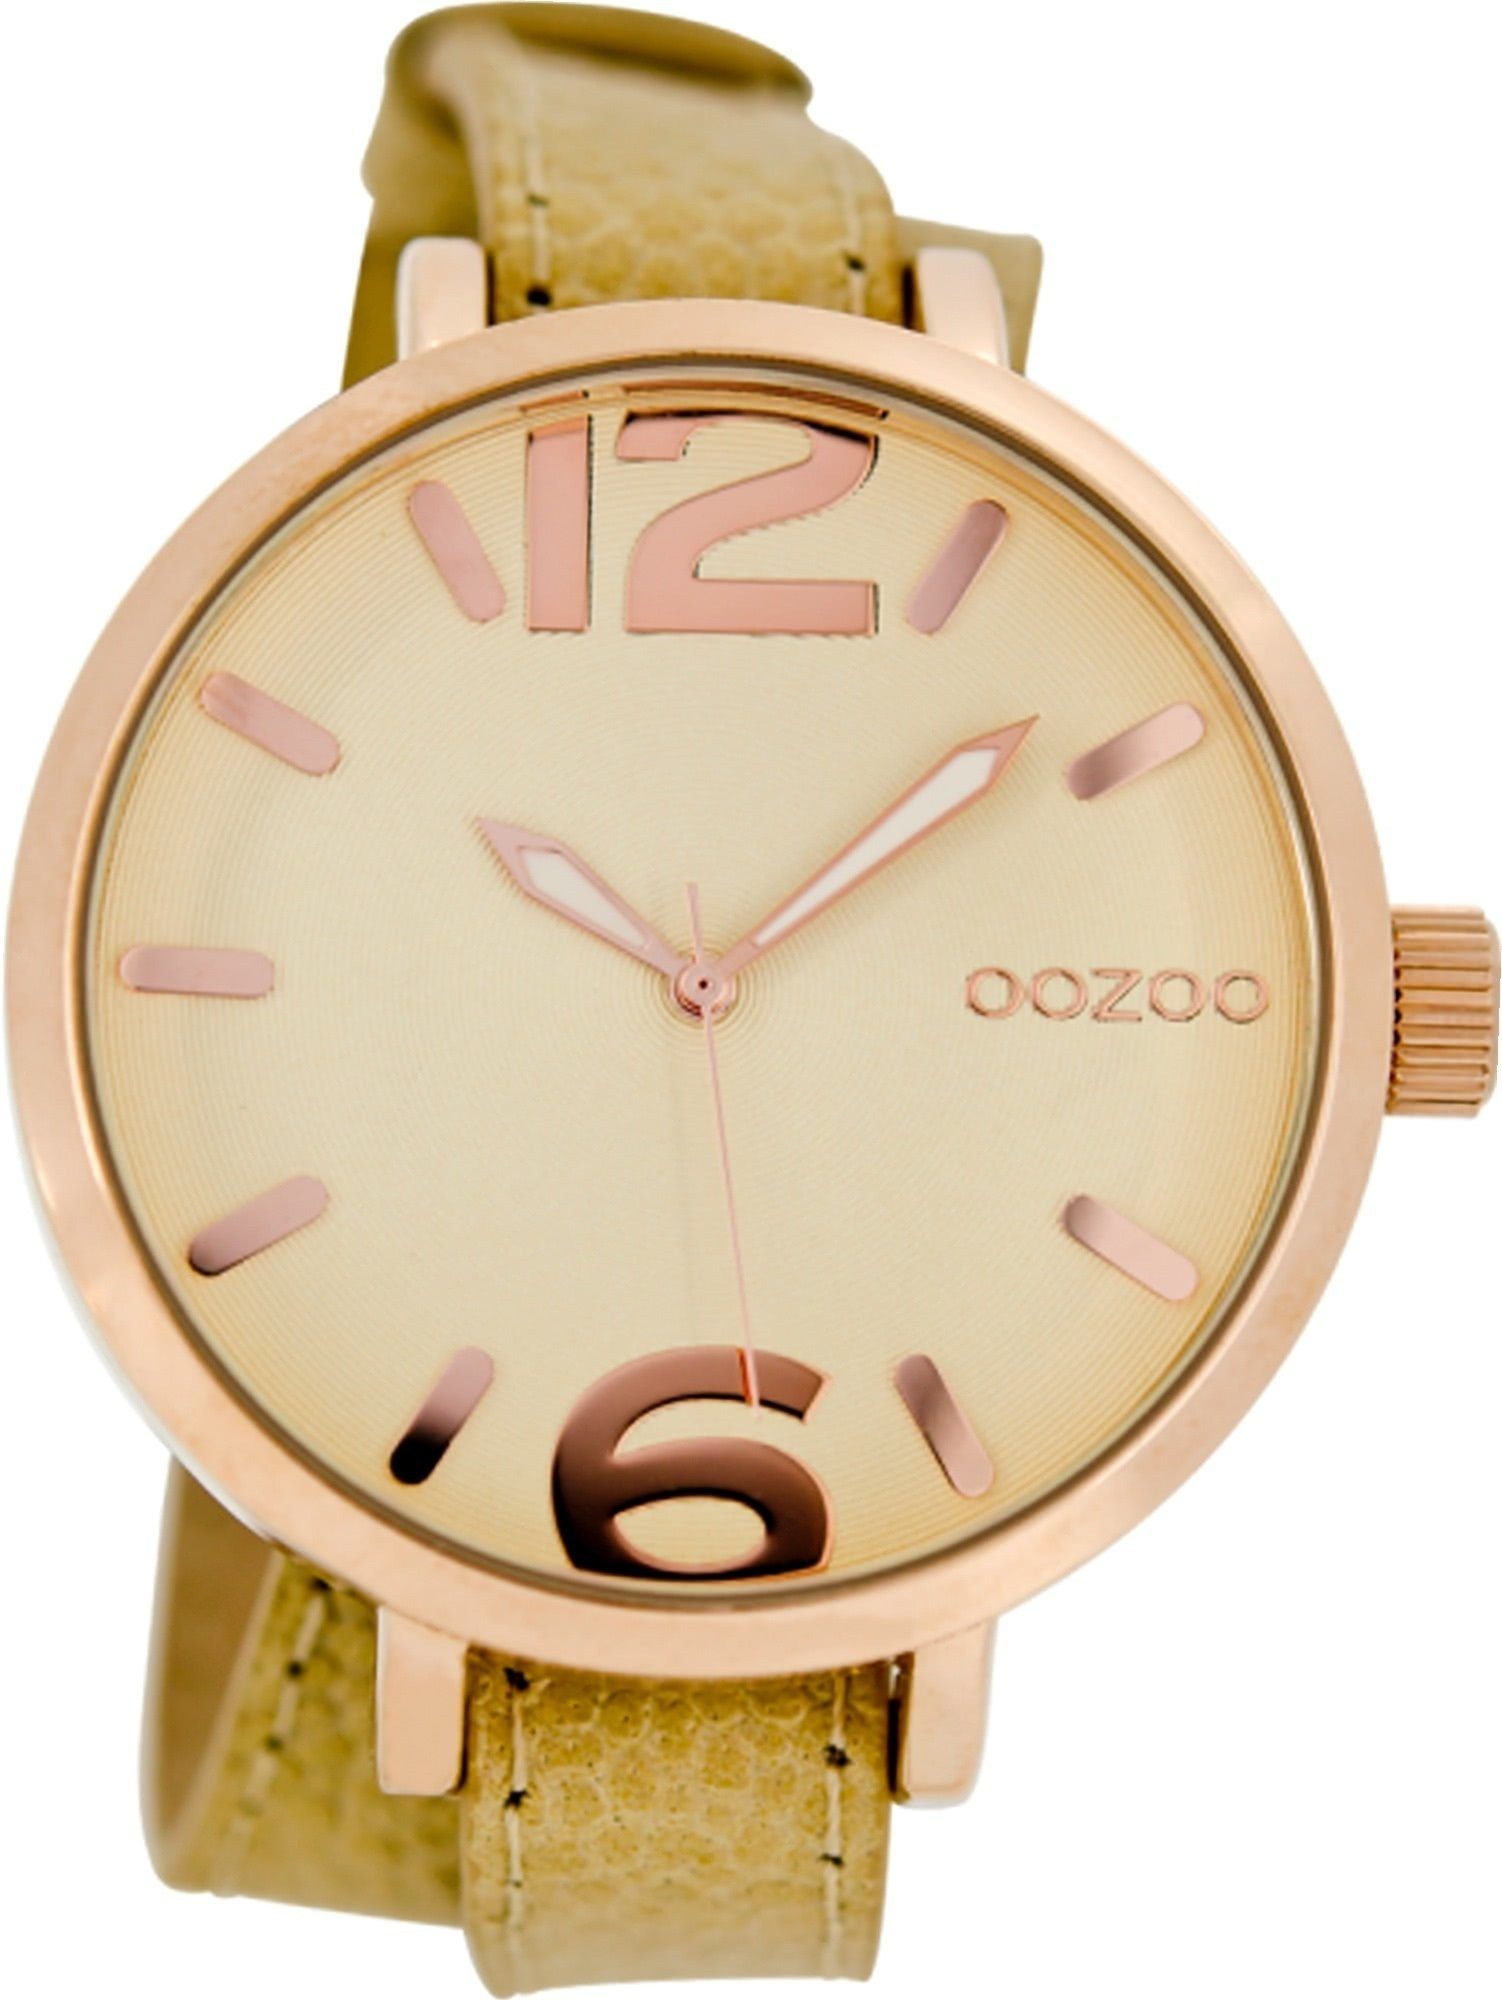 OOZOO Quarzuhr Oozoo Quarz-Uhr Damen rose Timepieces, Damenuhr Lederarmband beige, braun, rundes Gehäuse, groß (ca. 45mm)